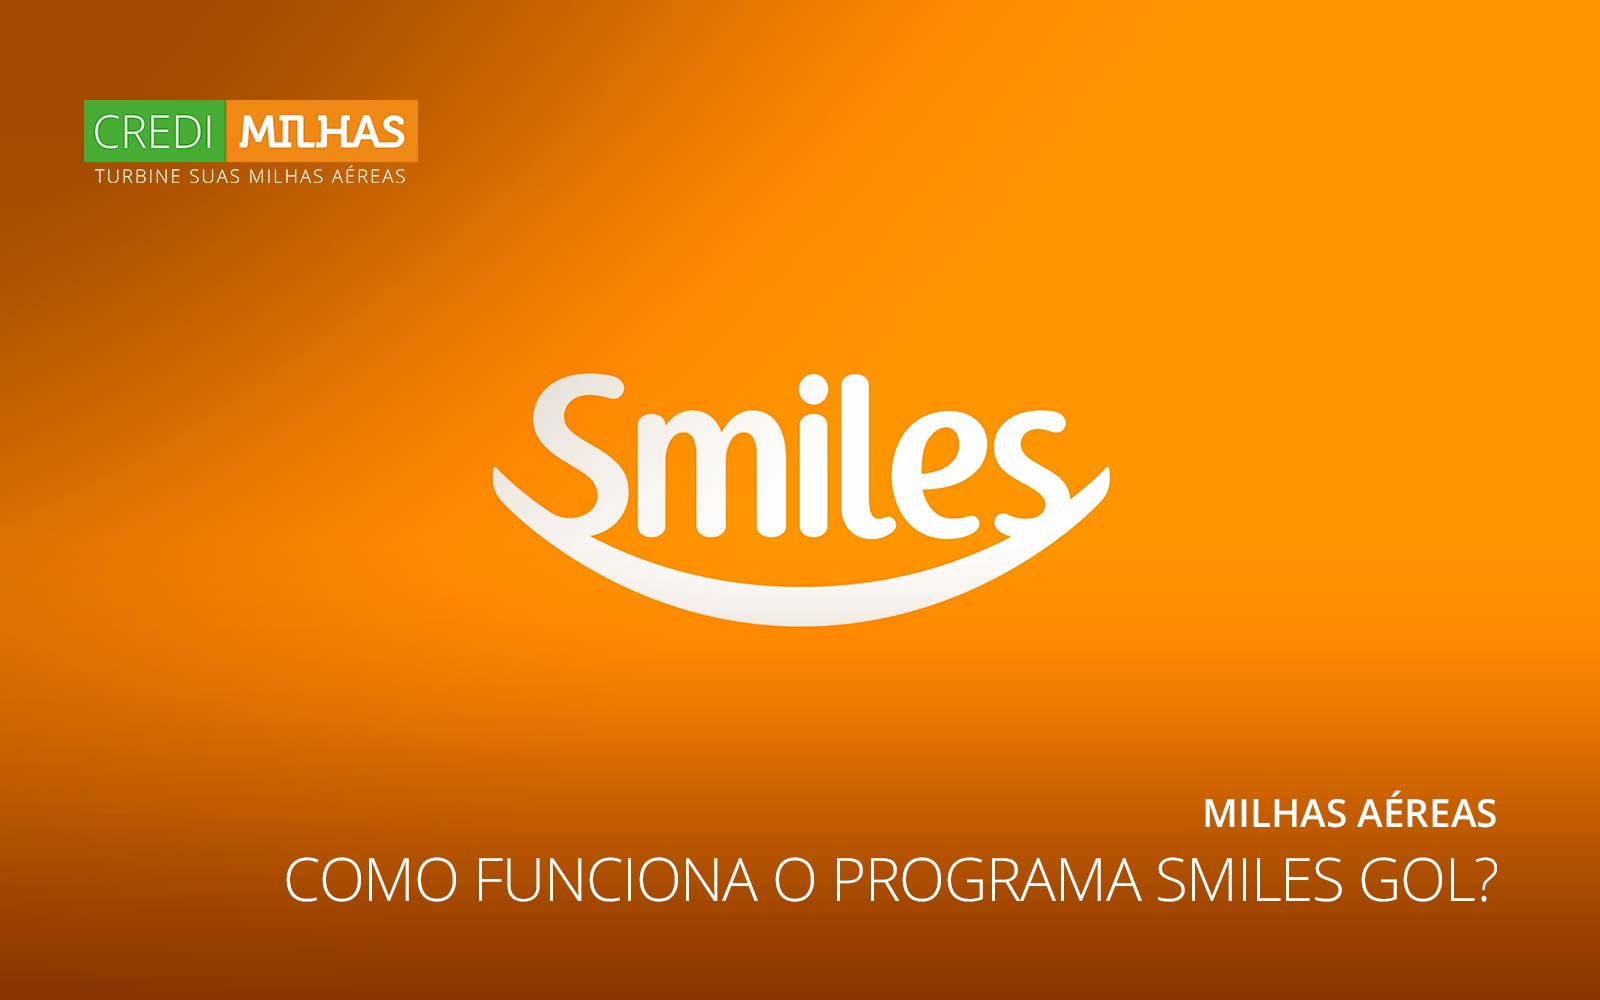 credimilhas-compra-milhas-aereas-programa-fidelidade-gol-pontos-programa-smiles-milhas-2016-03